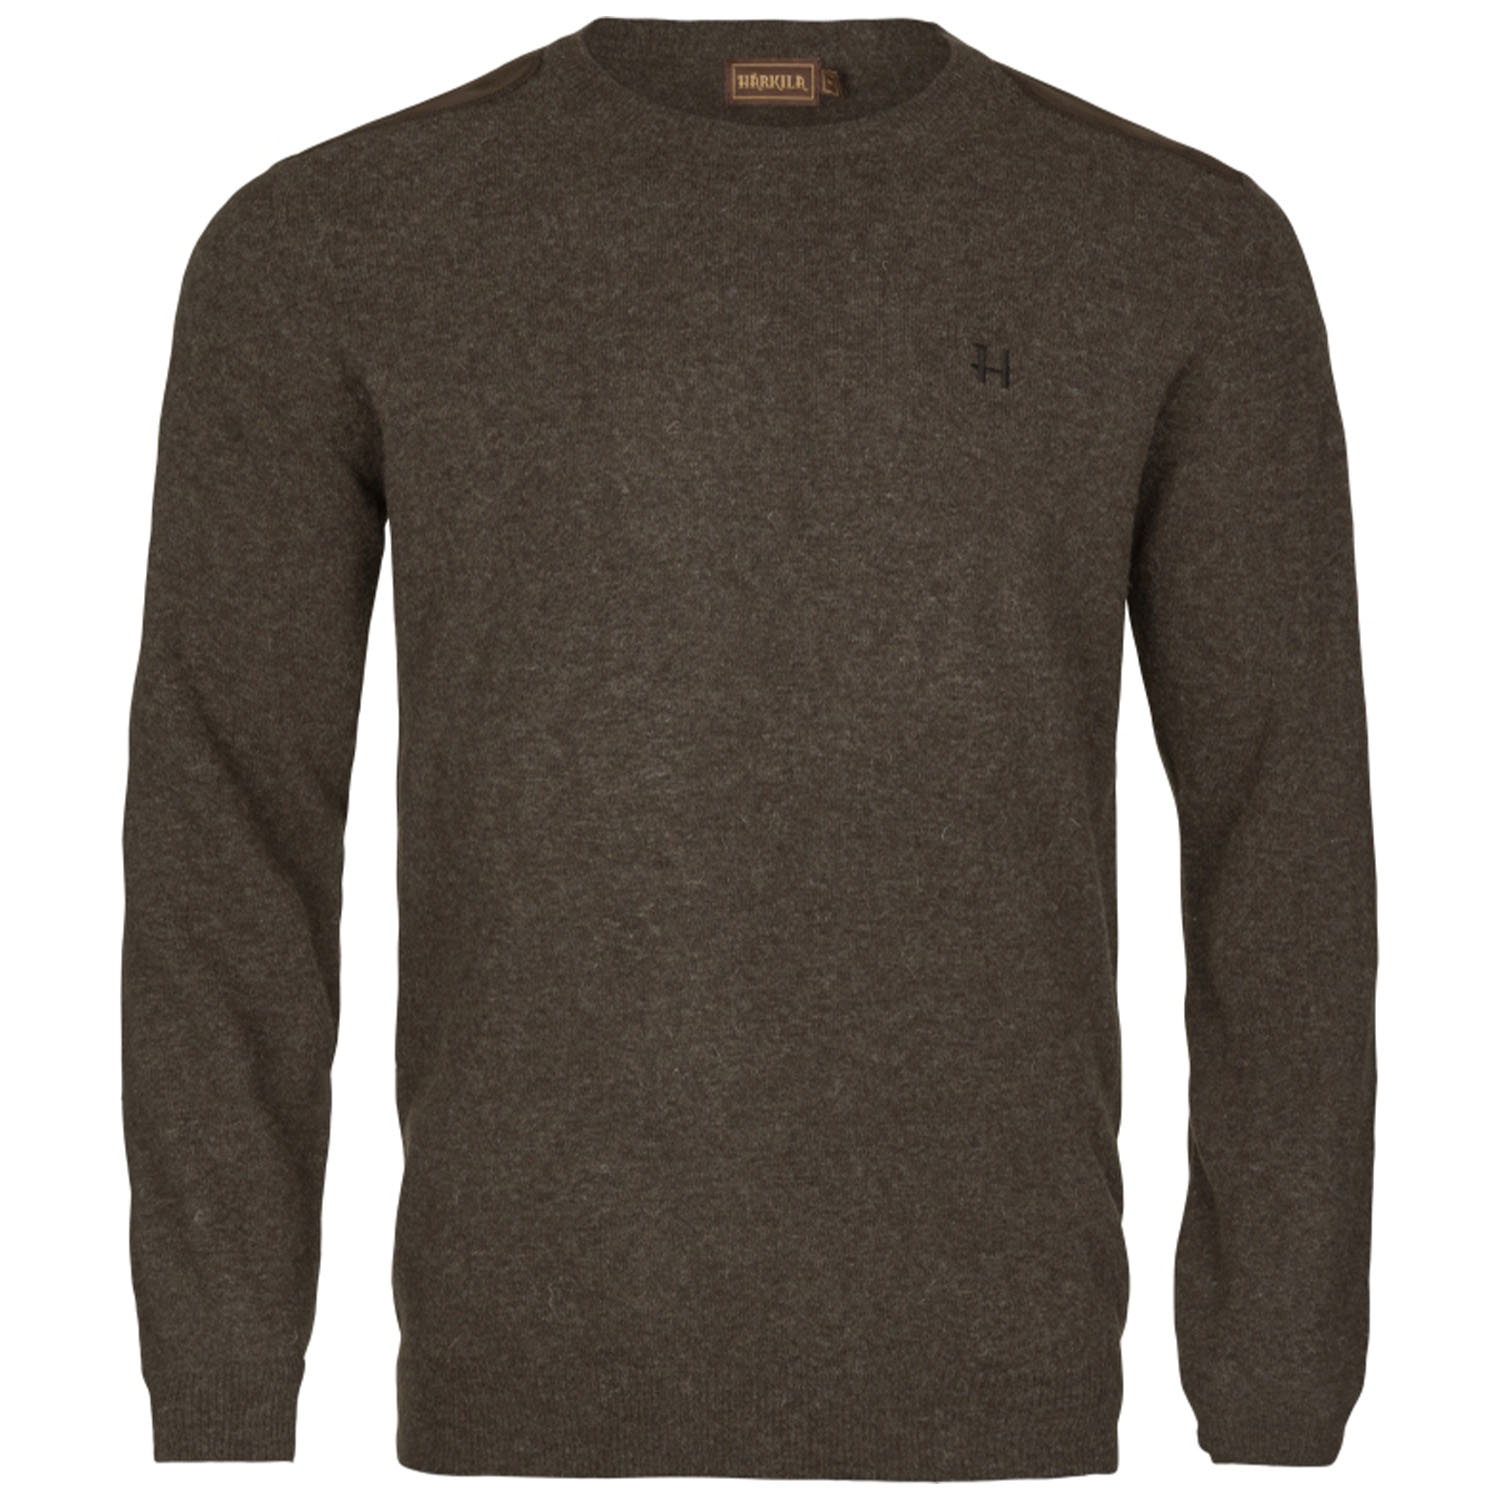 Härkila pullover arran (slate brown) - Sweaters & Jerseys